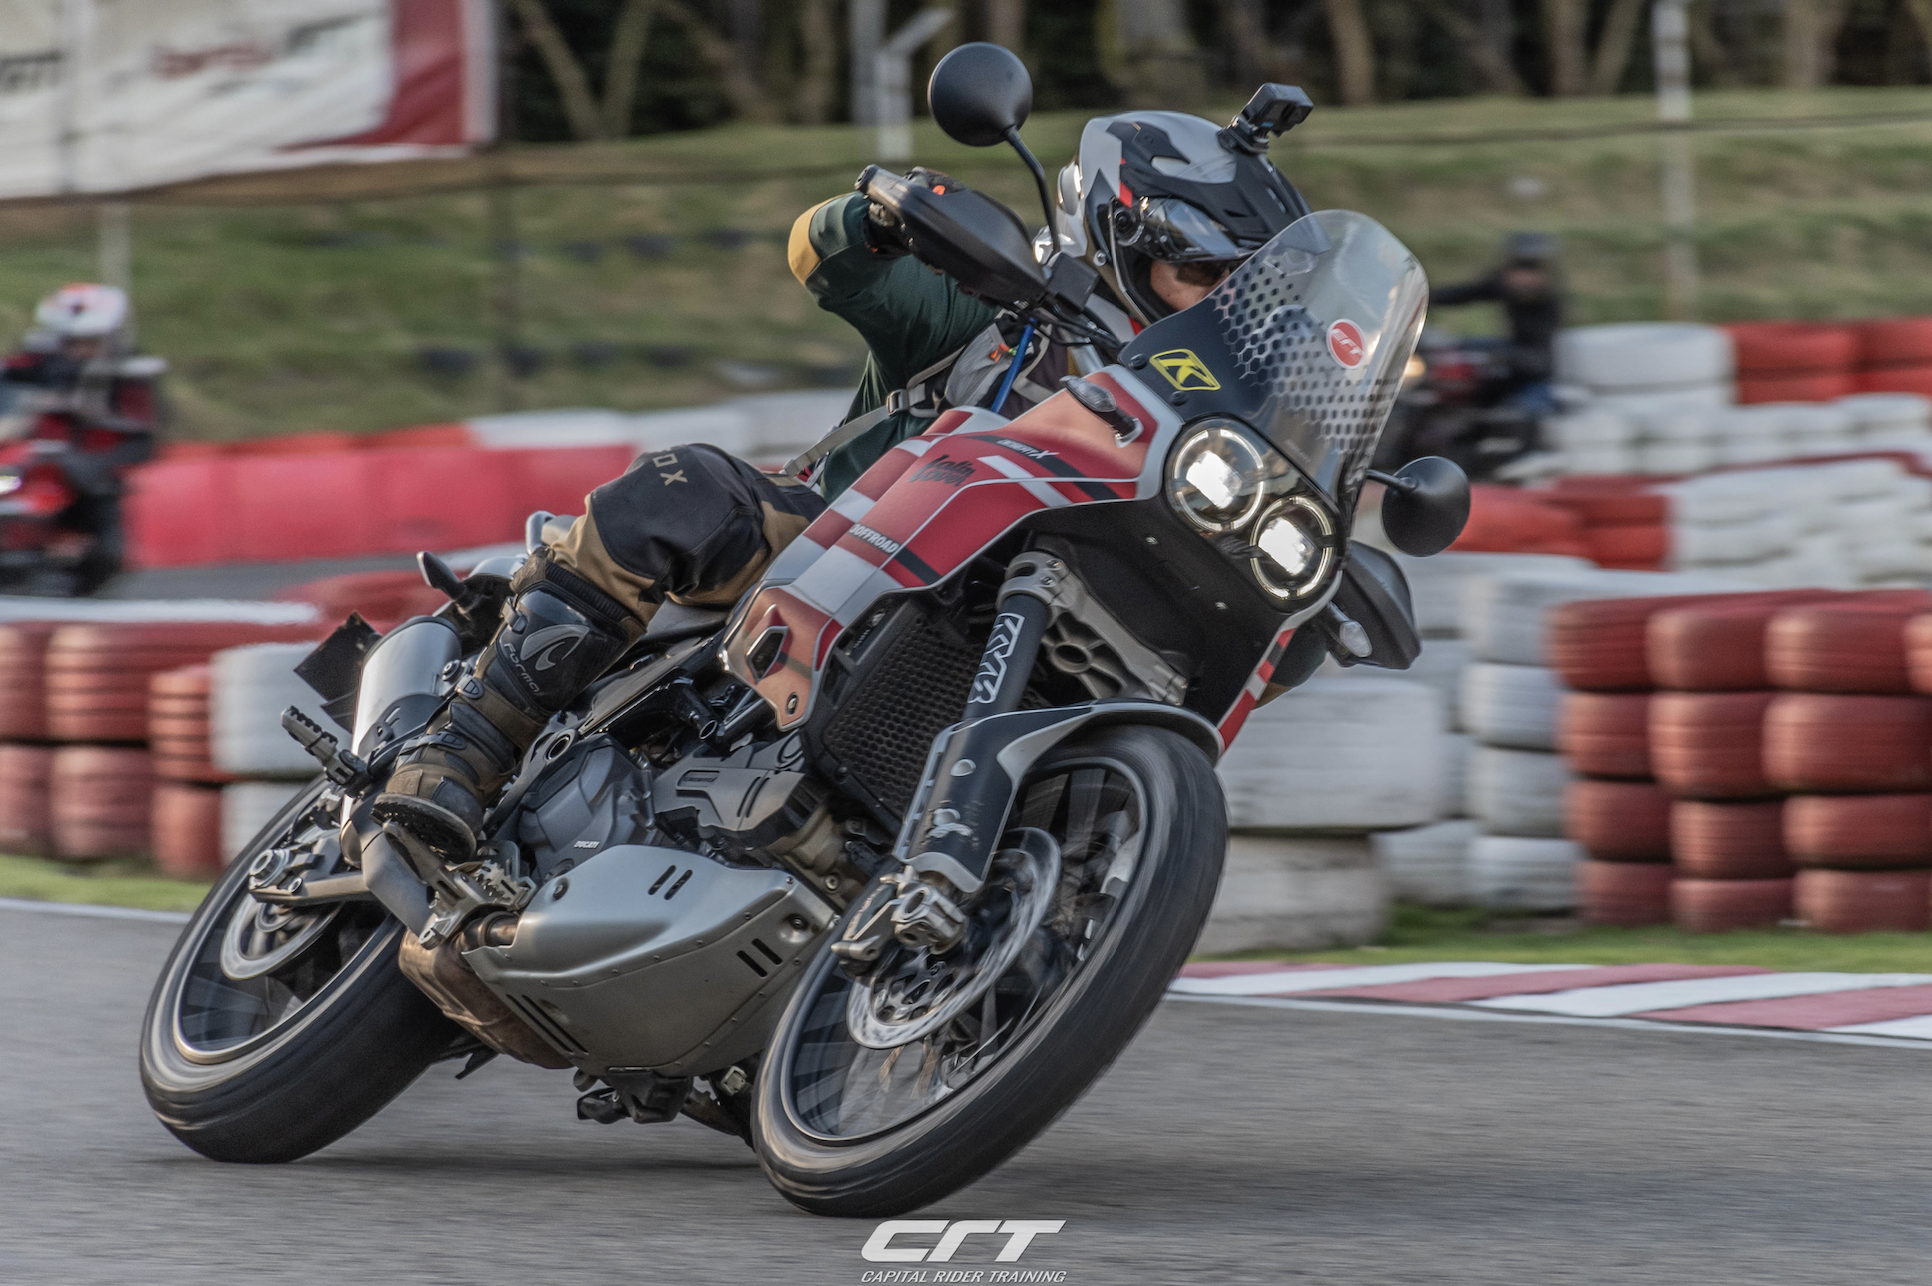 cursos en moto doble propósito todoterreno Capital Rider aventura bmw moto ducati